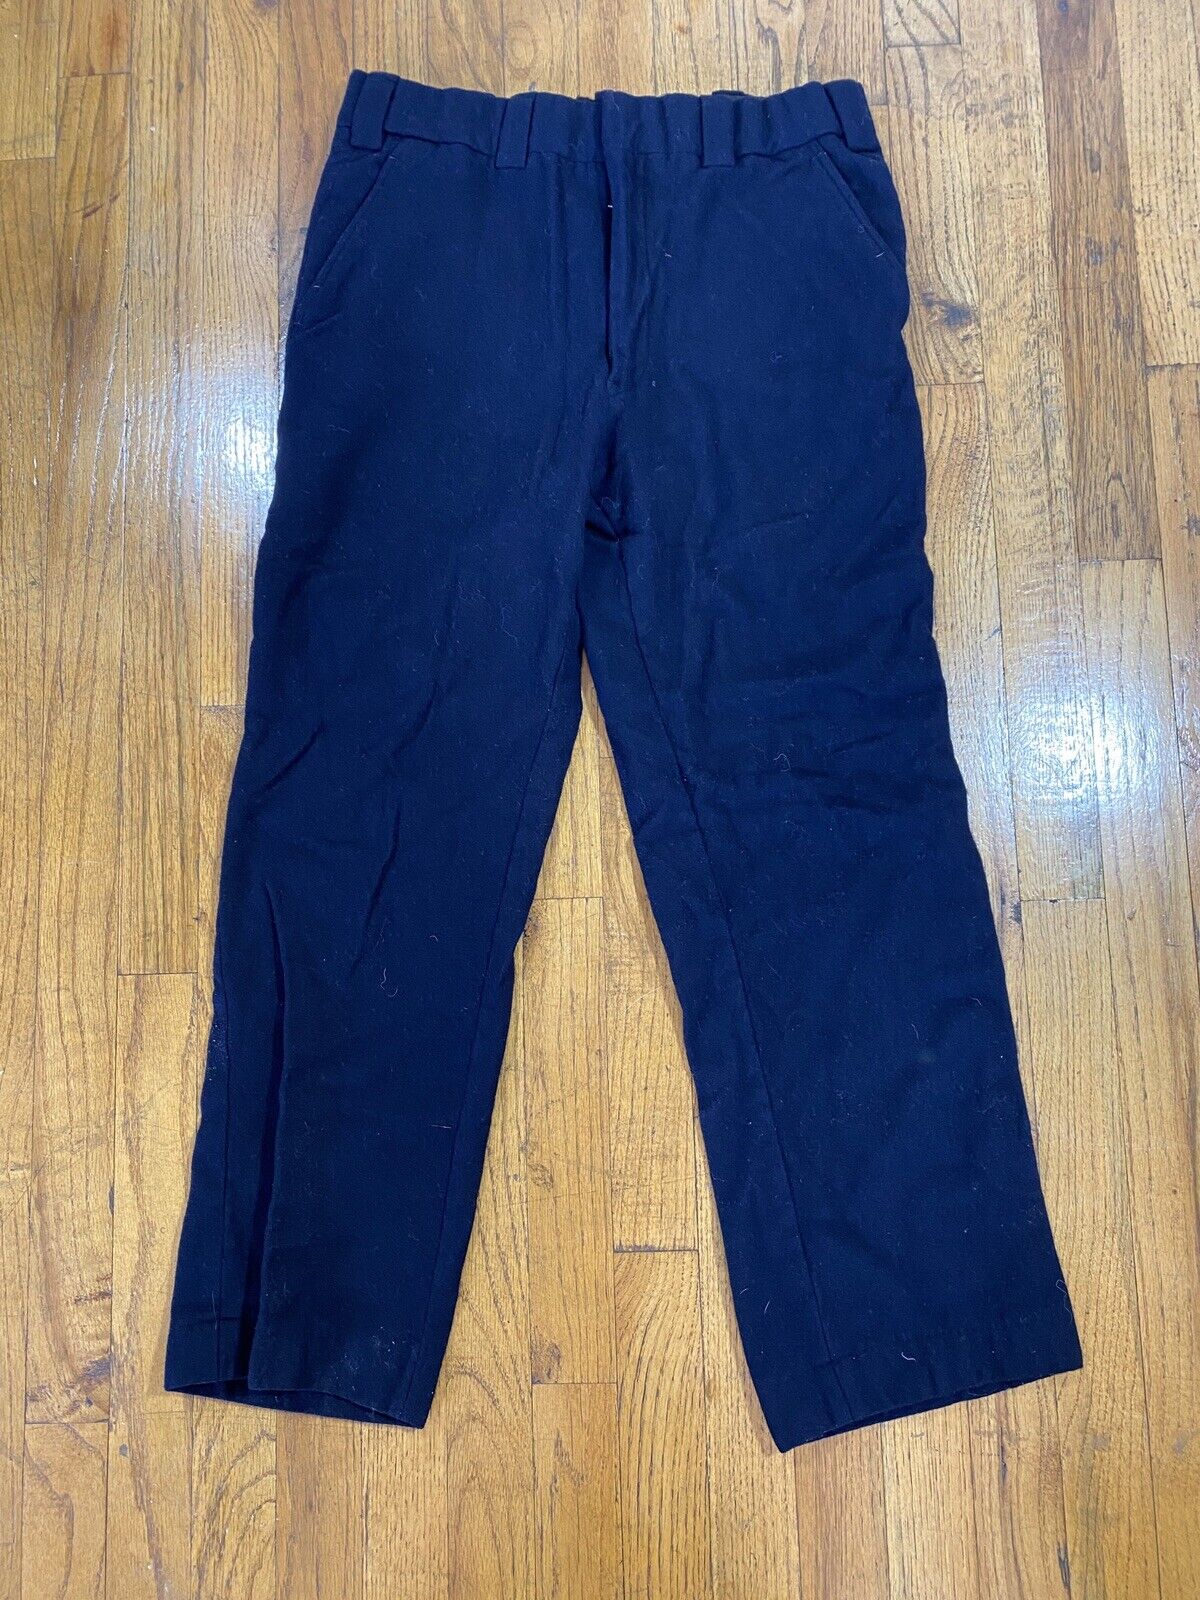 True Vintage 50s 60s Wool Trousers Pants, Navy Blue, Wide leg 30x28